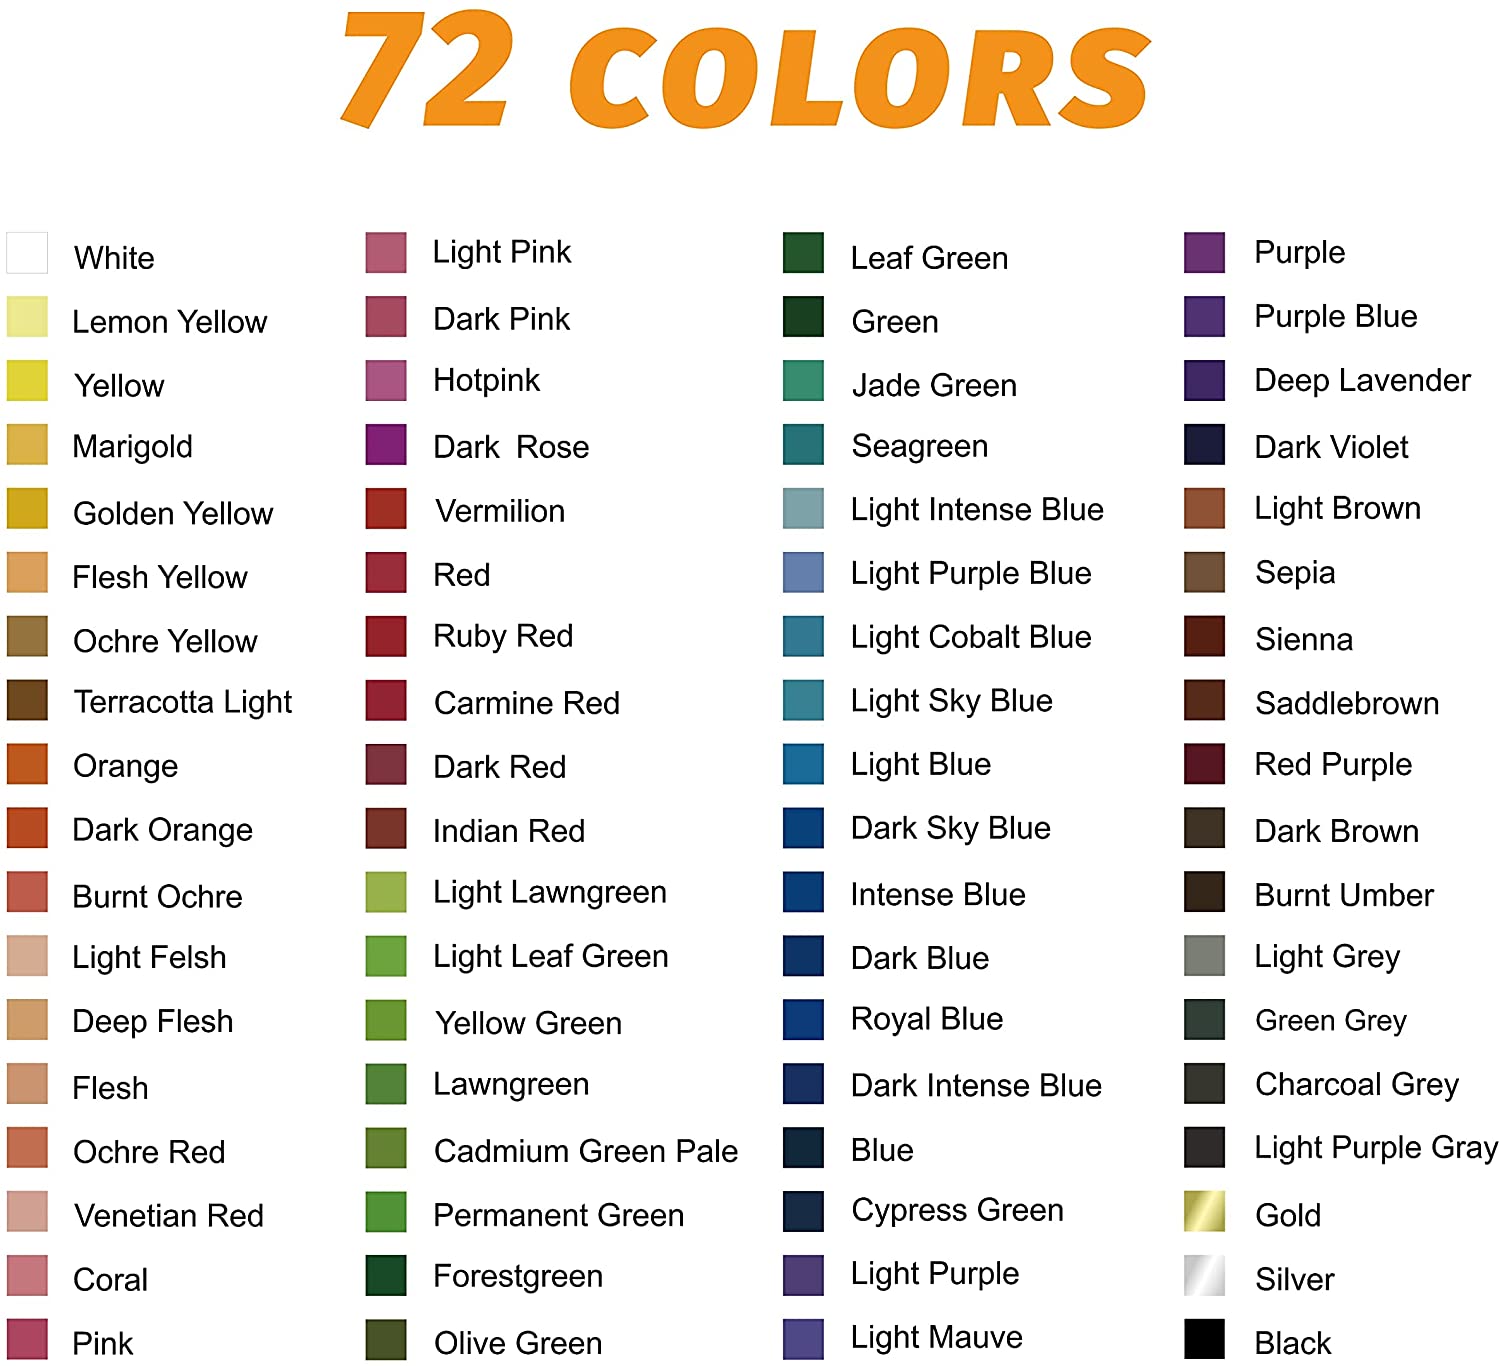 H&B Professional Coloured Pencil Set color shades